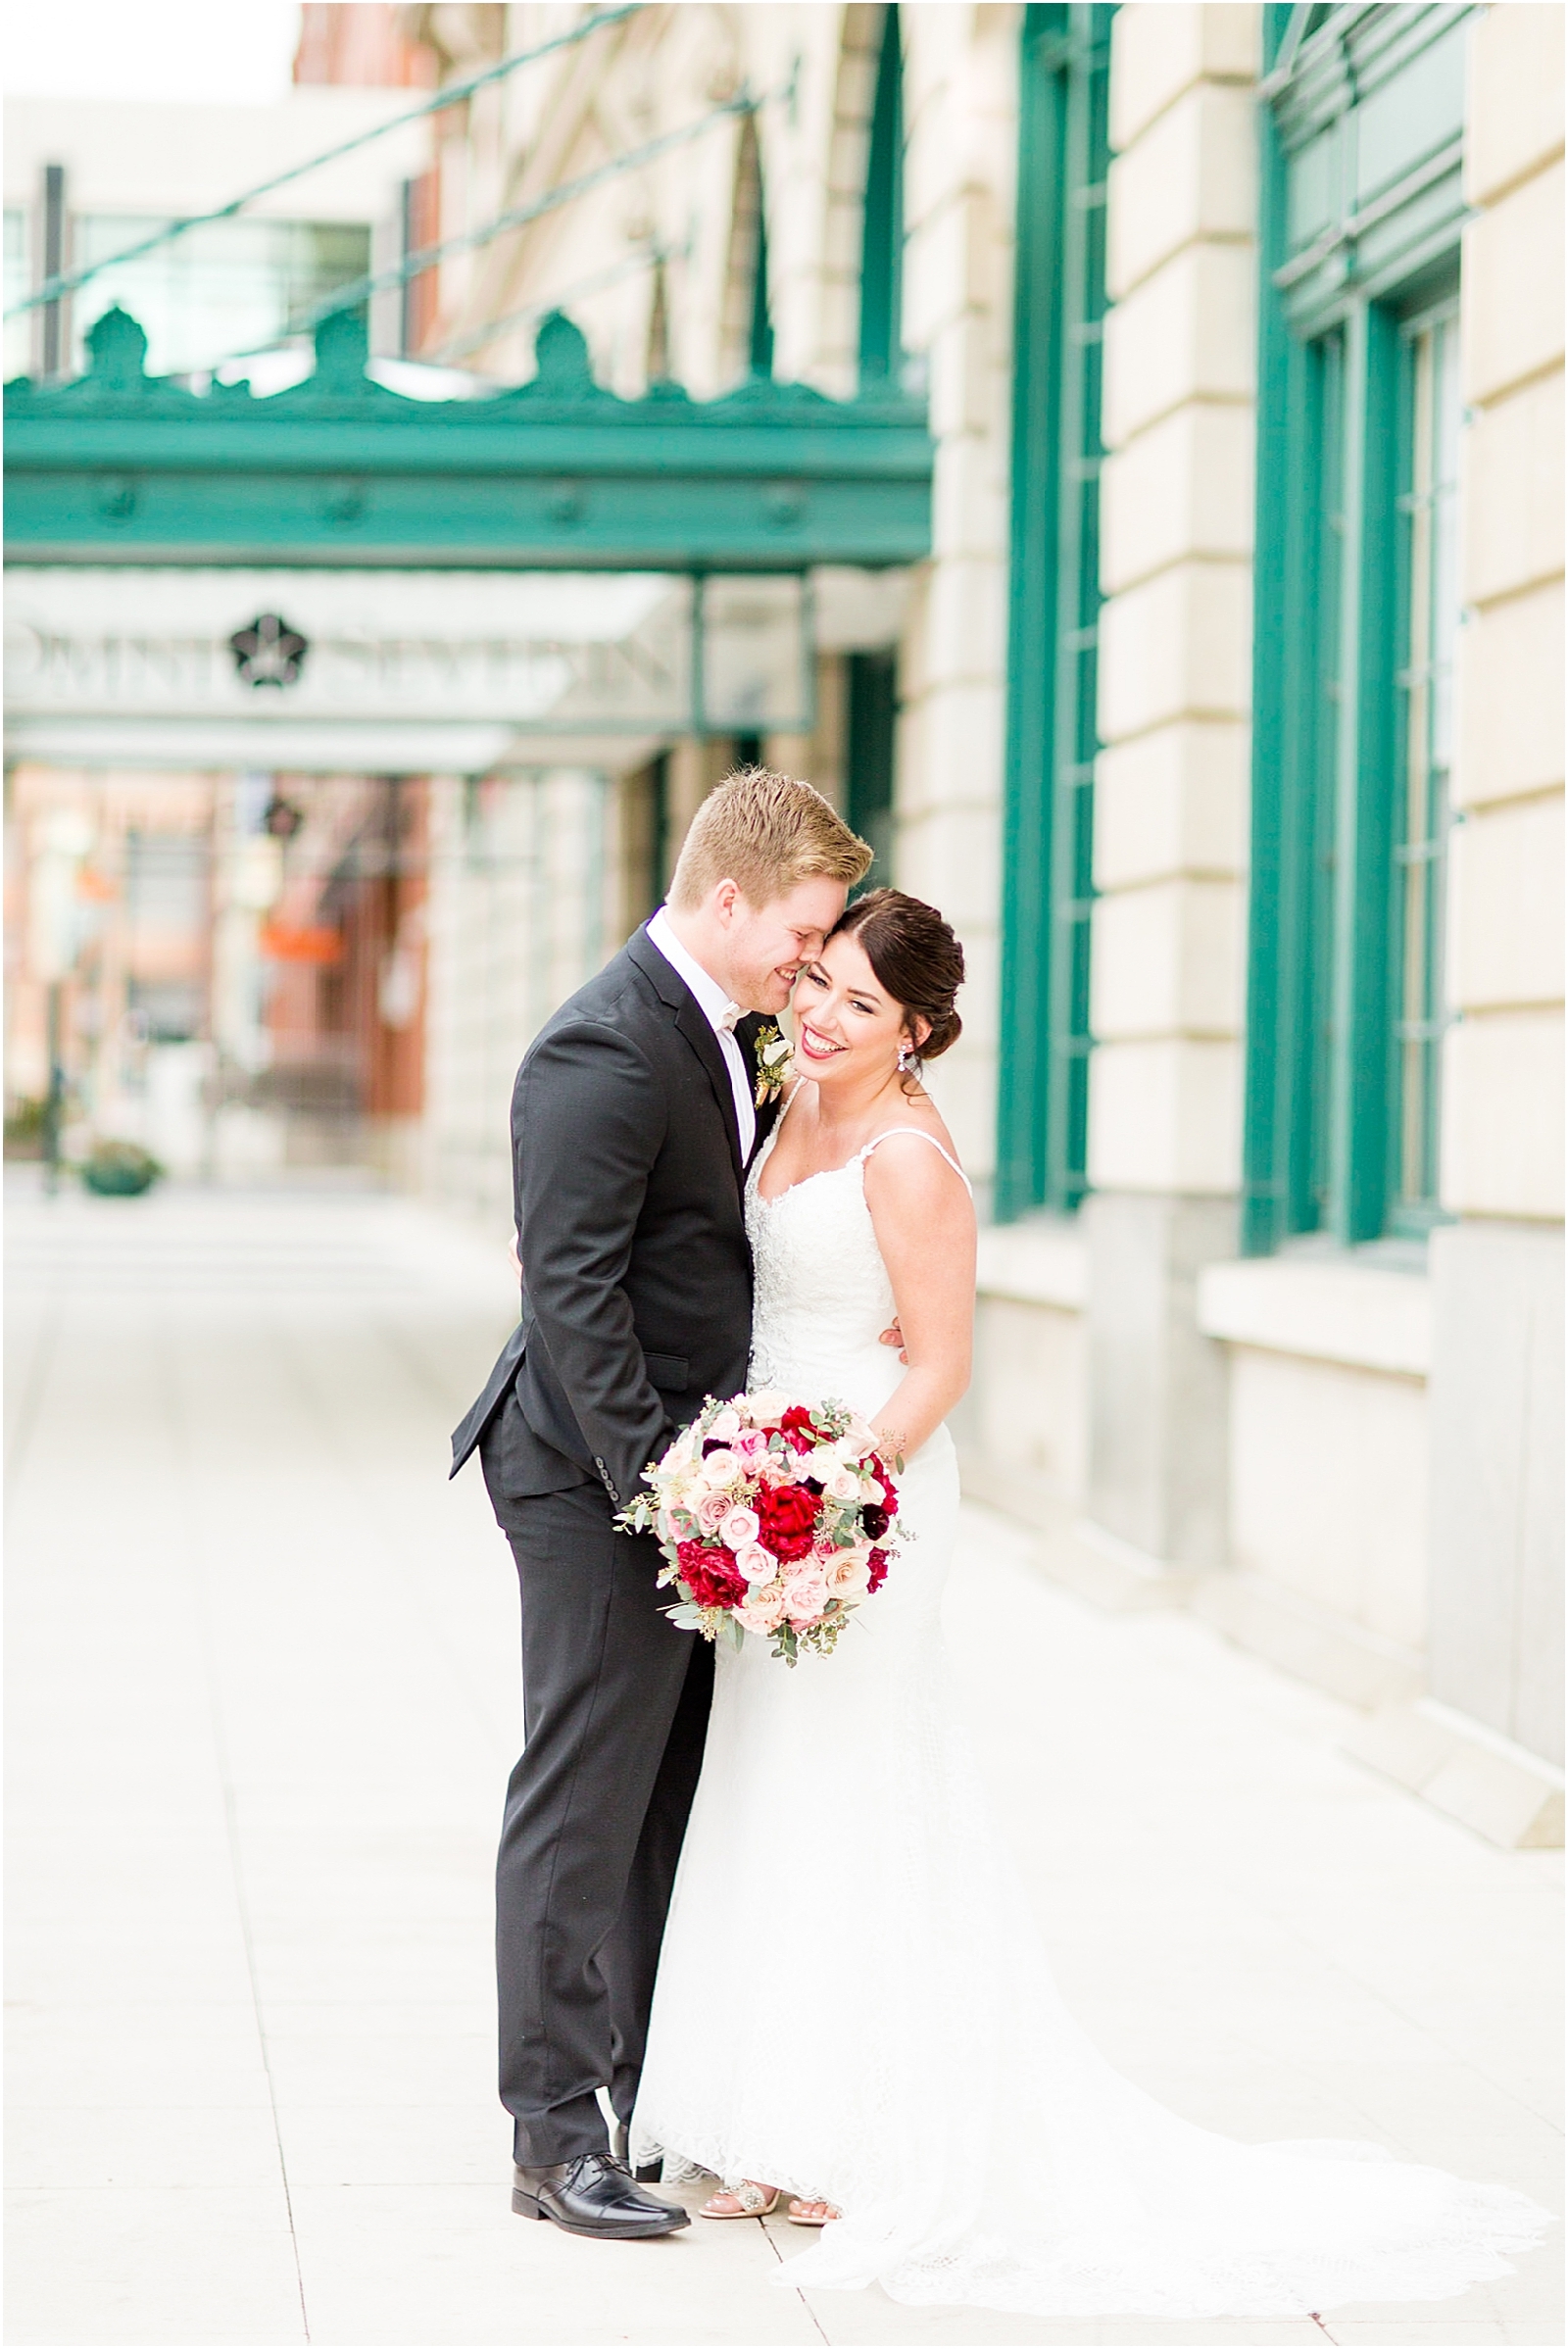 Tori and Jacson | Evansville Wedding Photographer | Bret and Brandie Photography0033.jpg